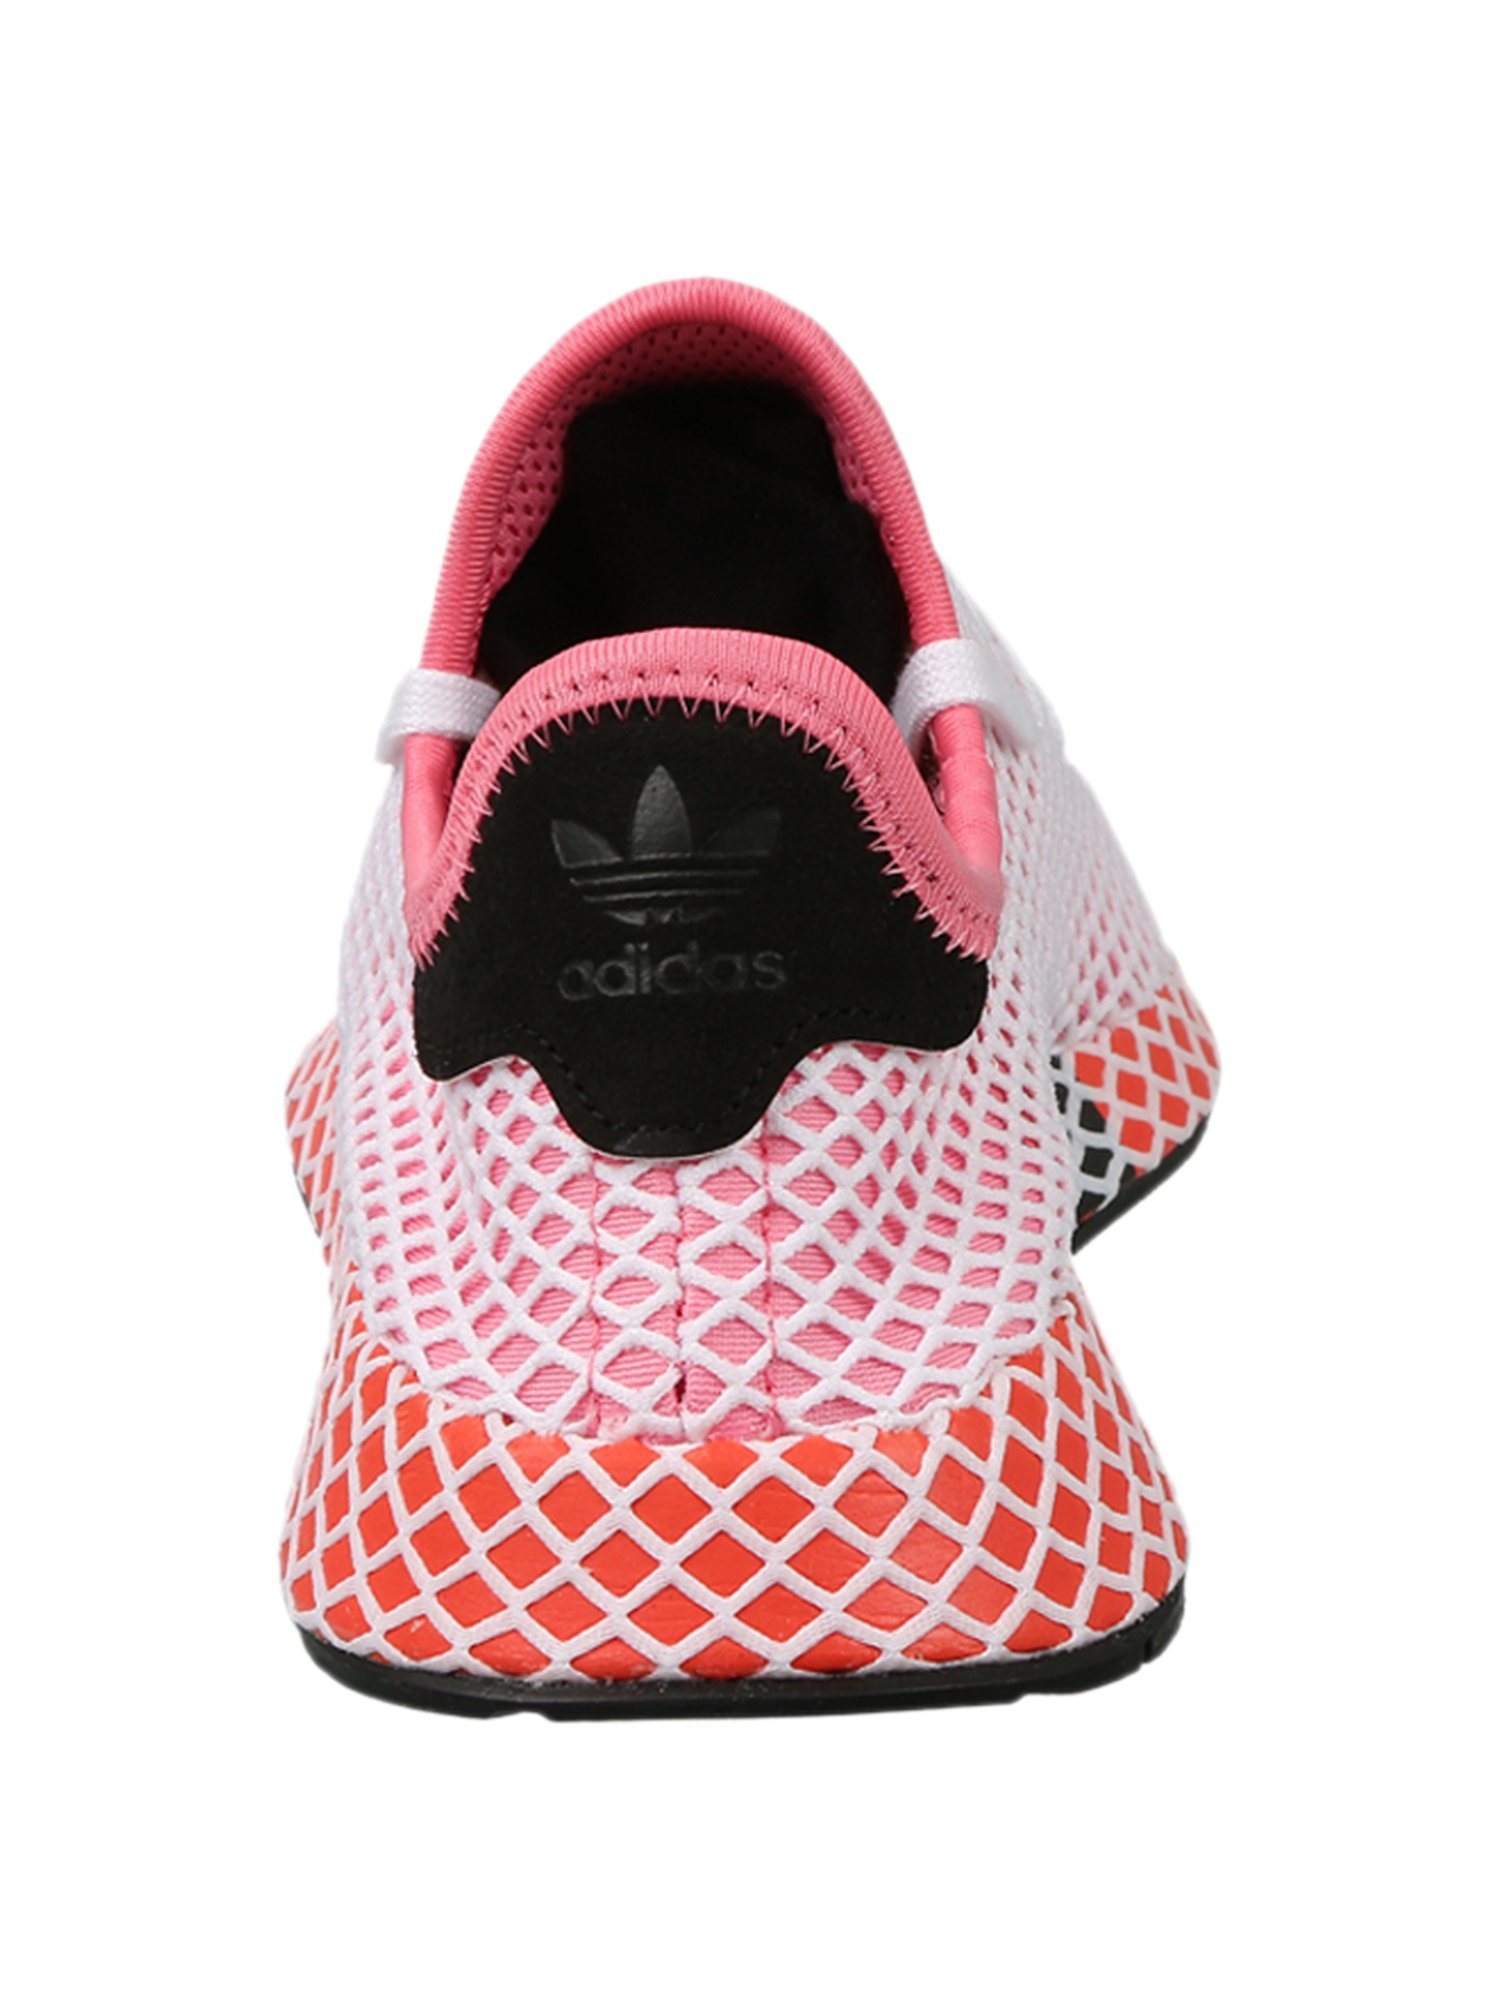 Buy Adidas Originals Deerupt Runner Pink & White Sneakers Women at Best Price @